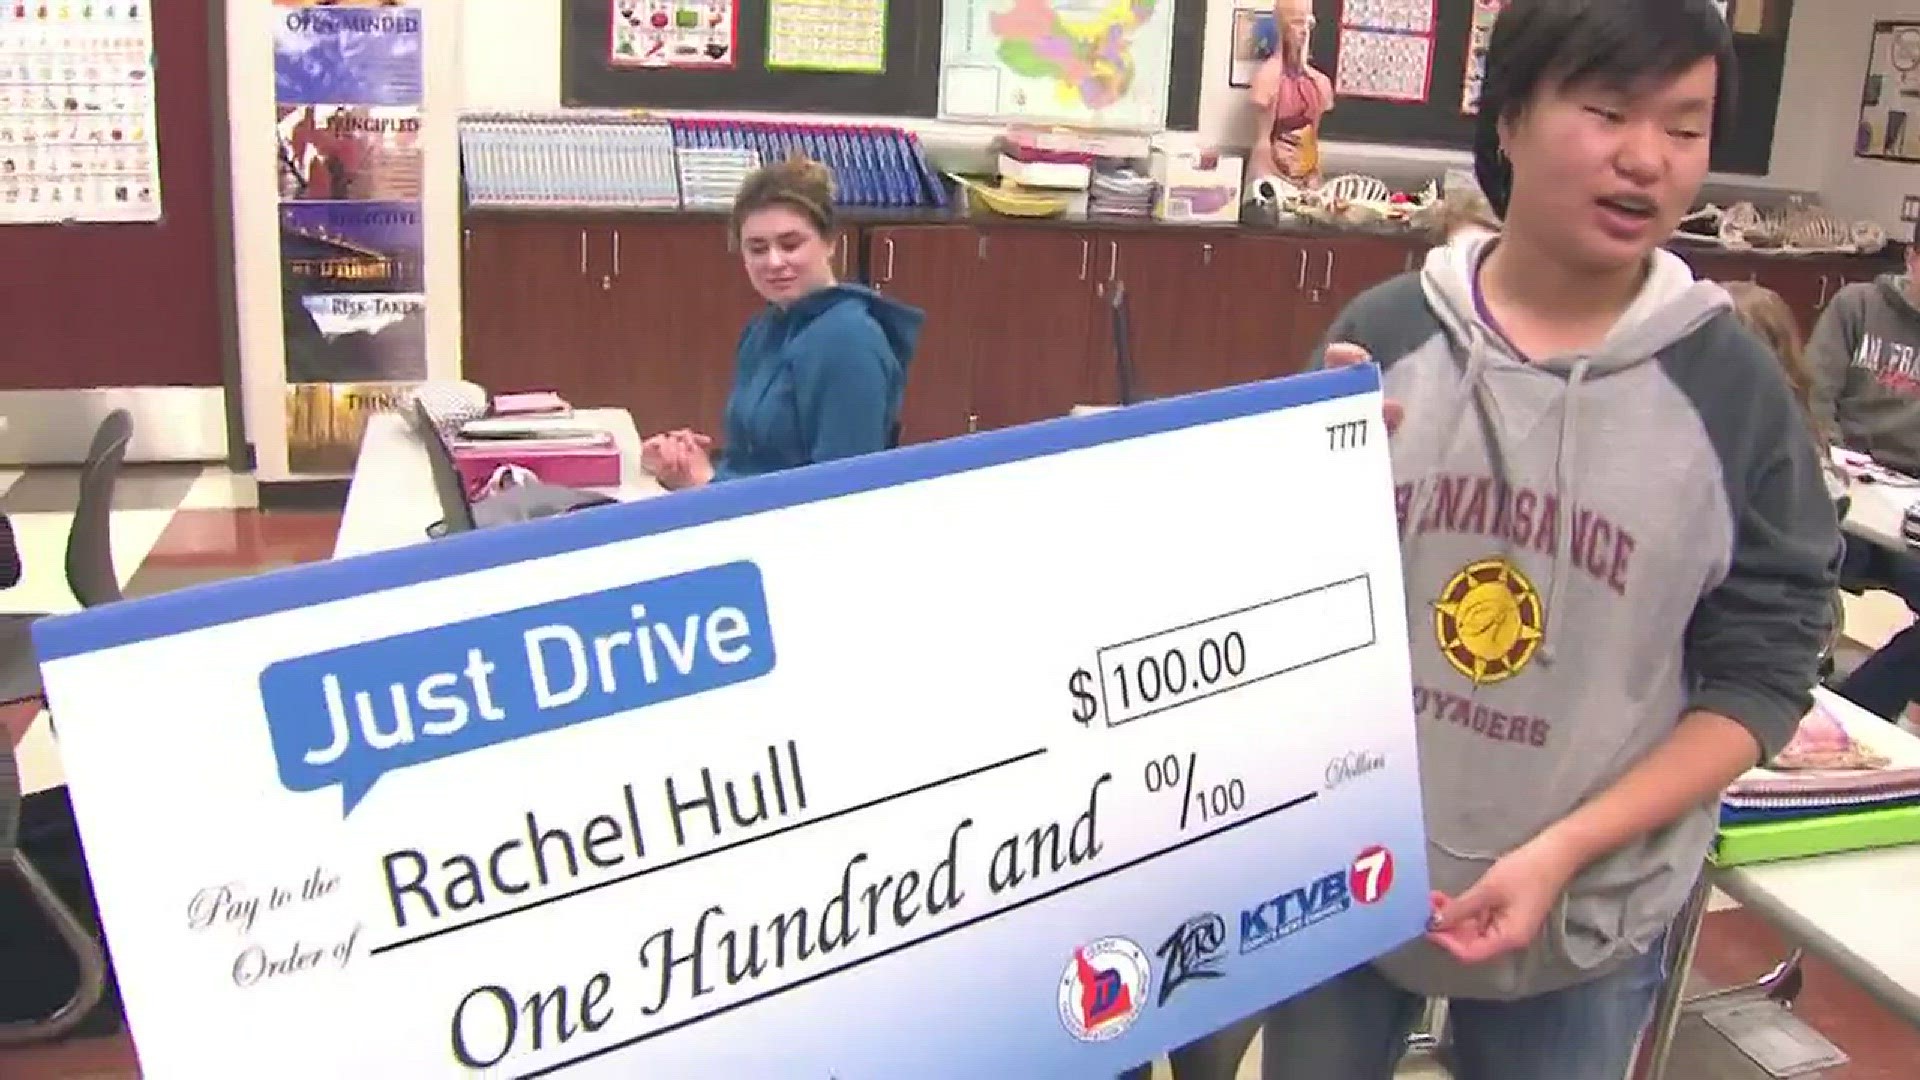 Just Drive video challenge runner up: Rachel Hull